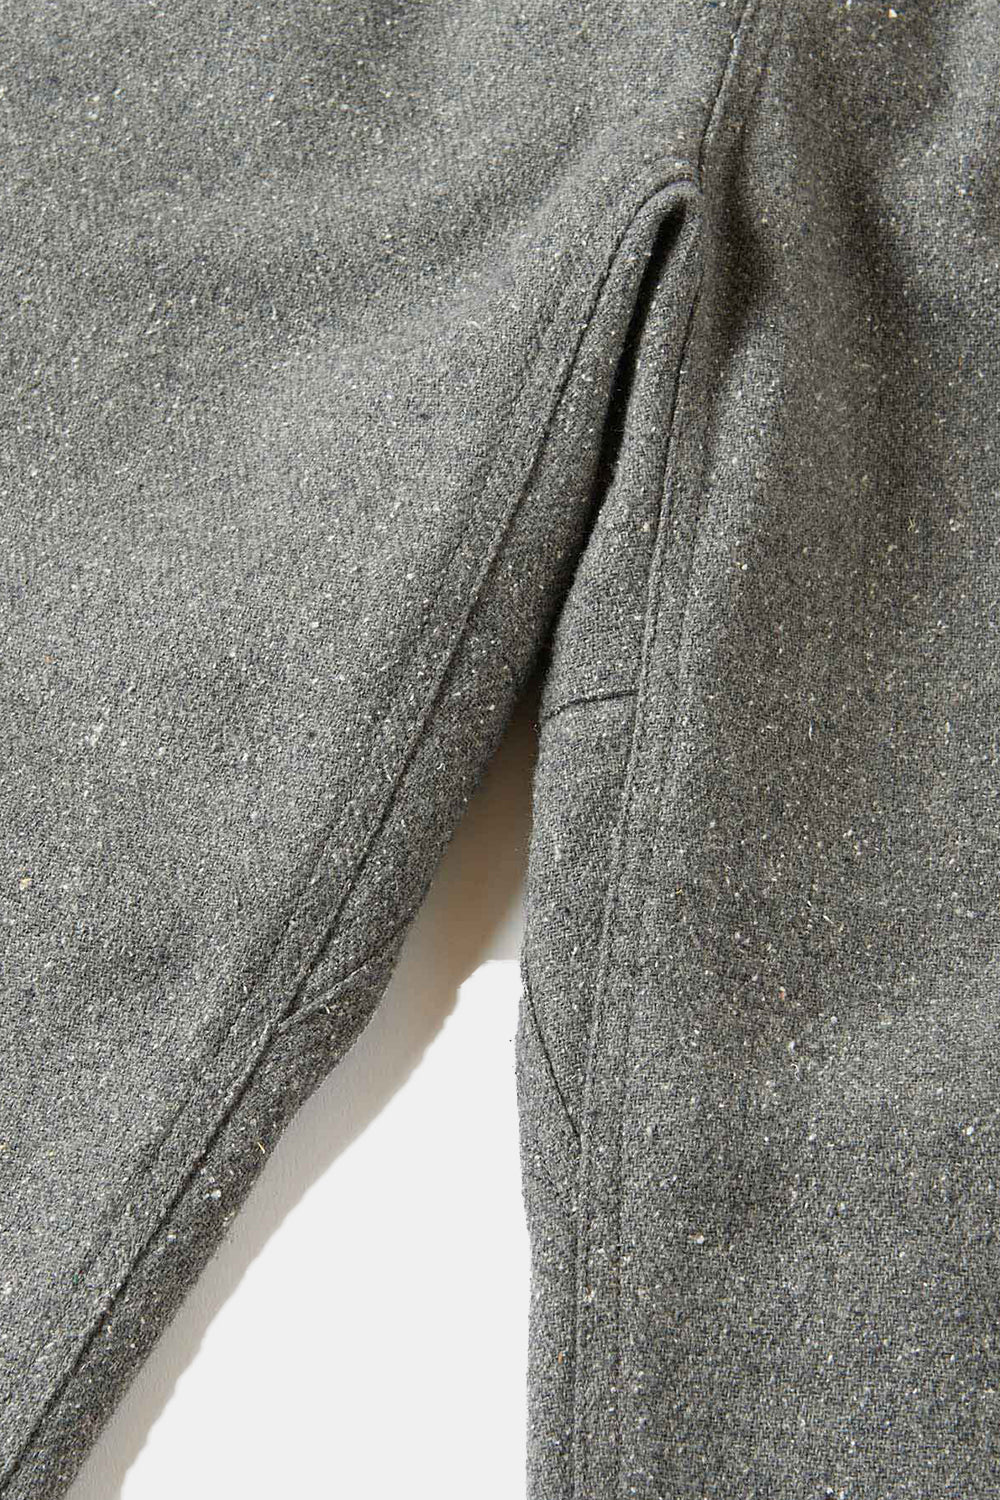 Gramicci Wool Pant (Charcoal)